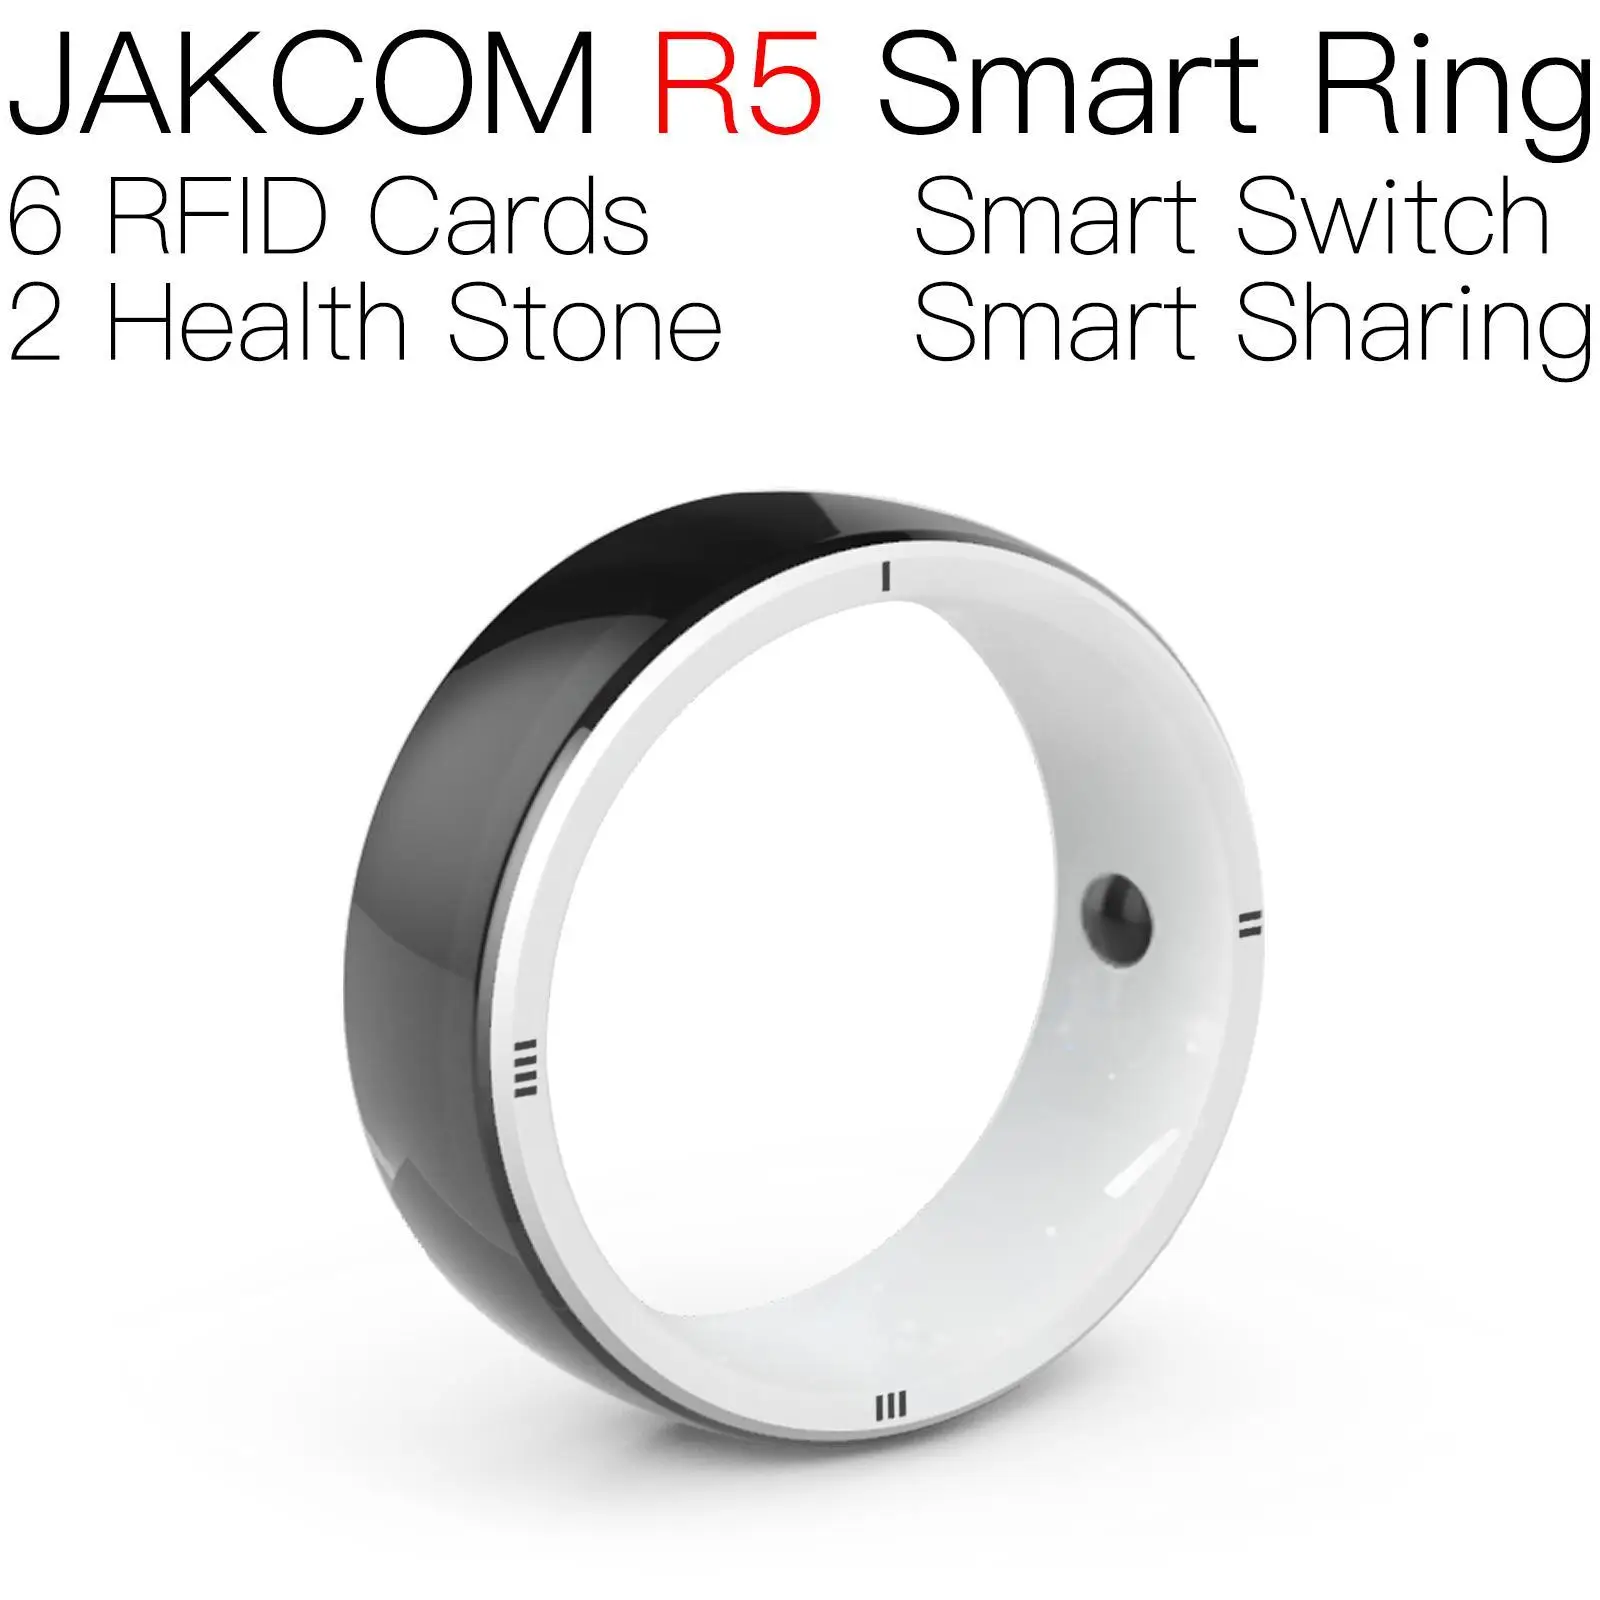 

JAKCOM R5 Smart Ring Match to crypto tag apertura nfc smartphone con y fingerprint proton gen2 the legend of rfid t5577 gps key